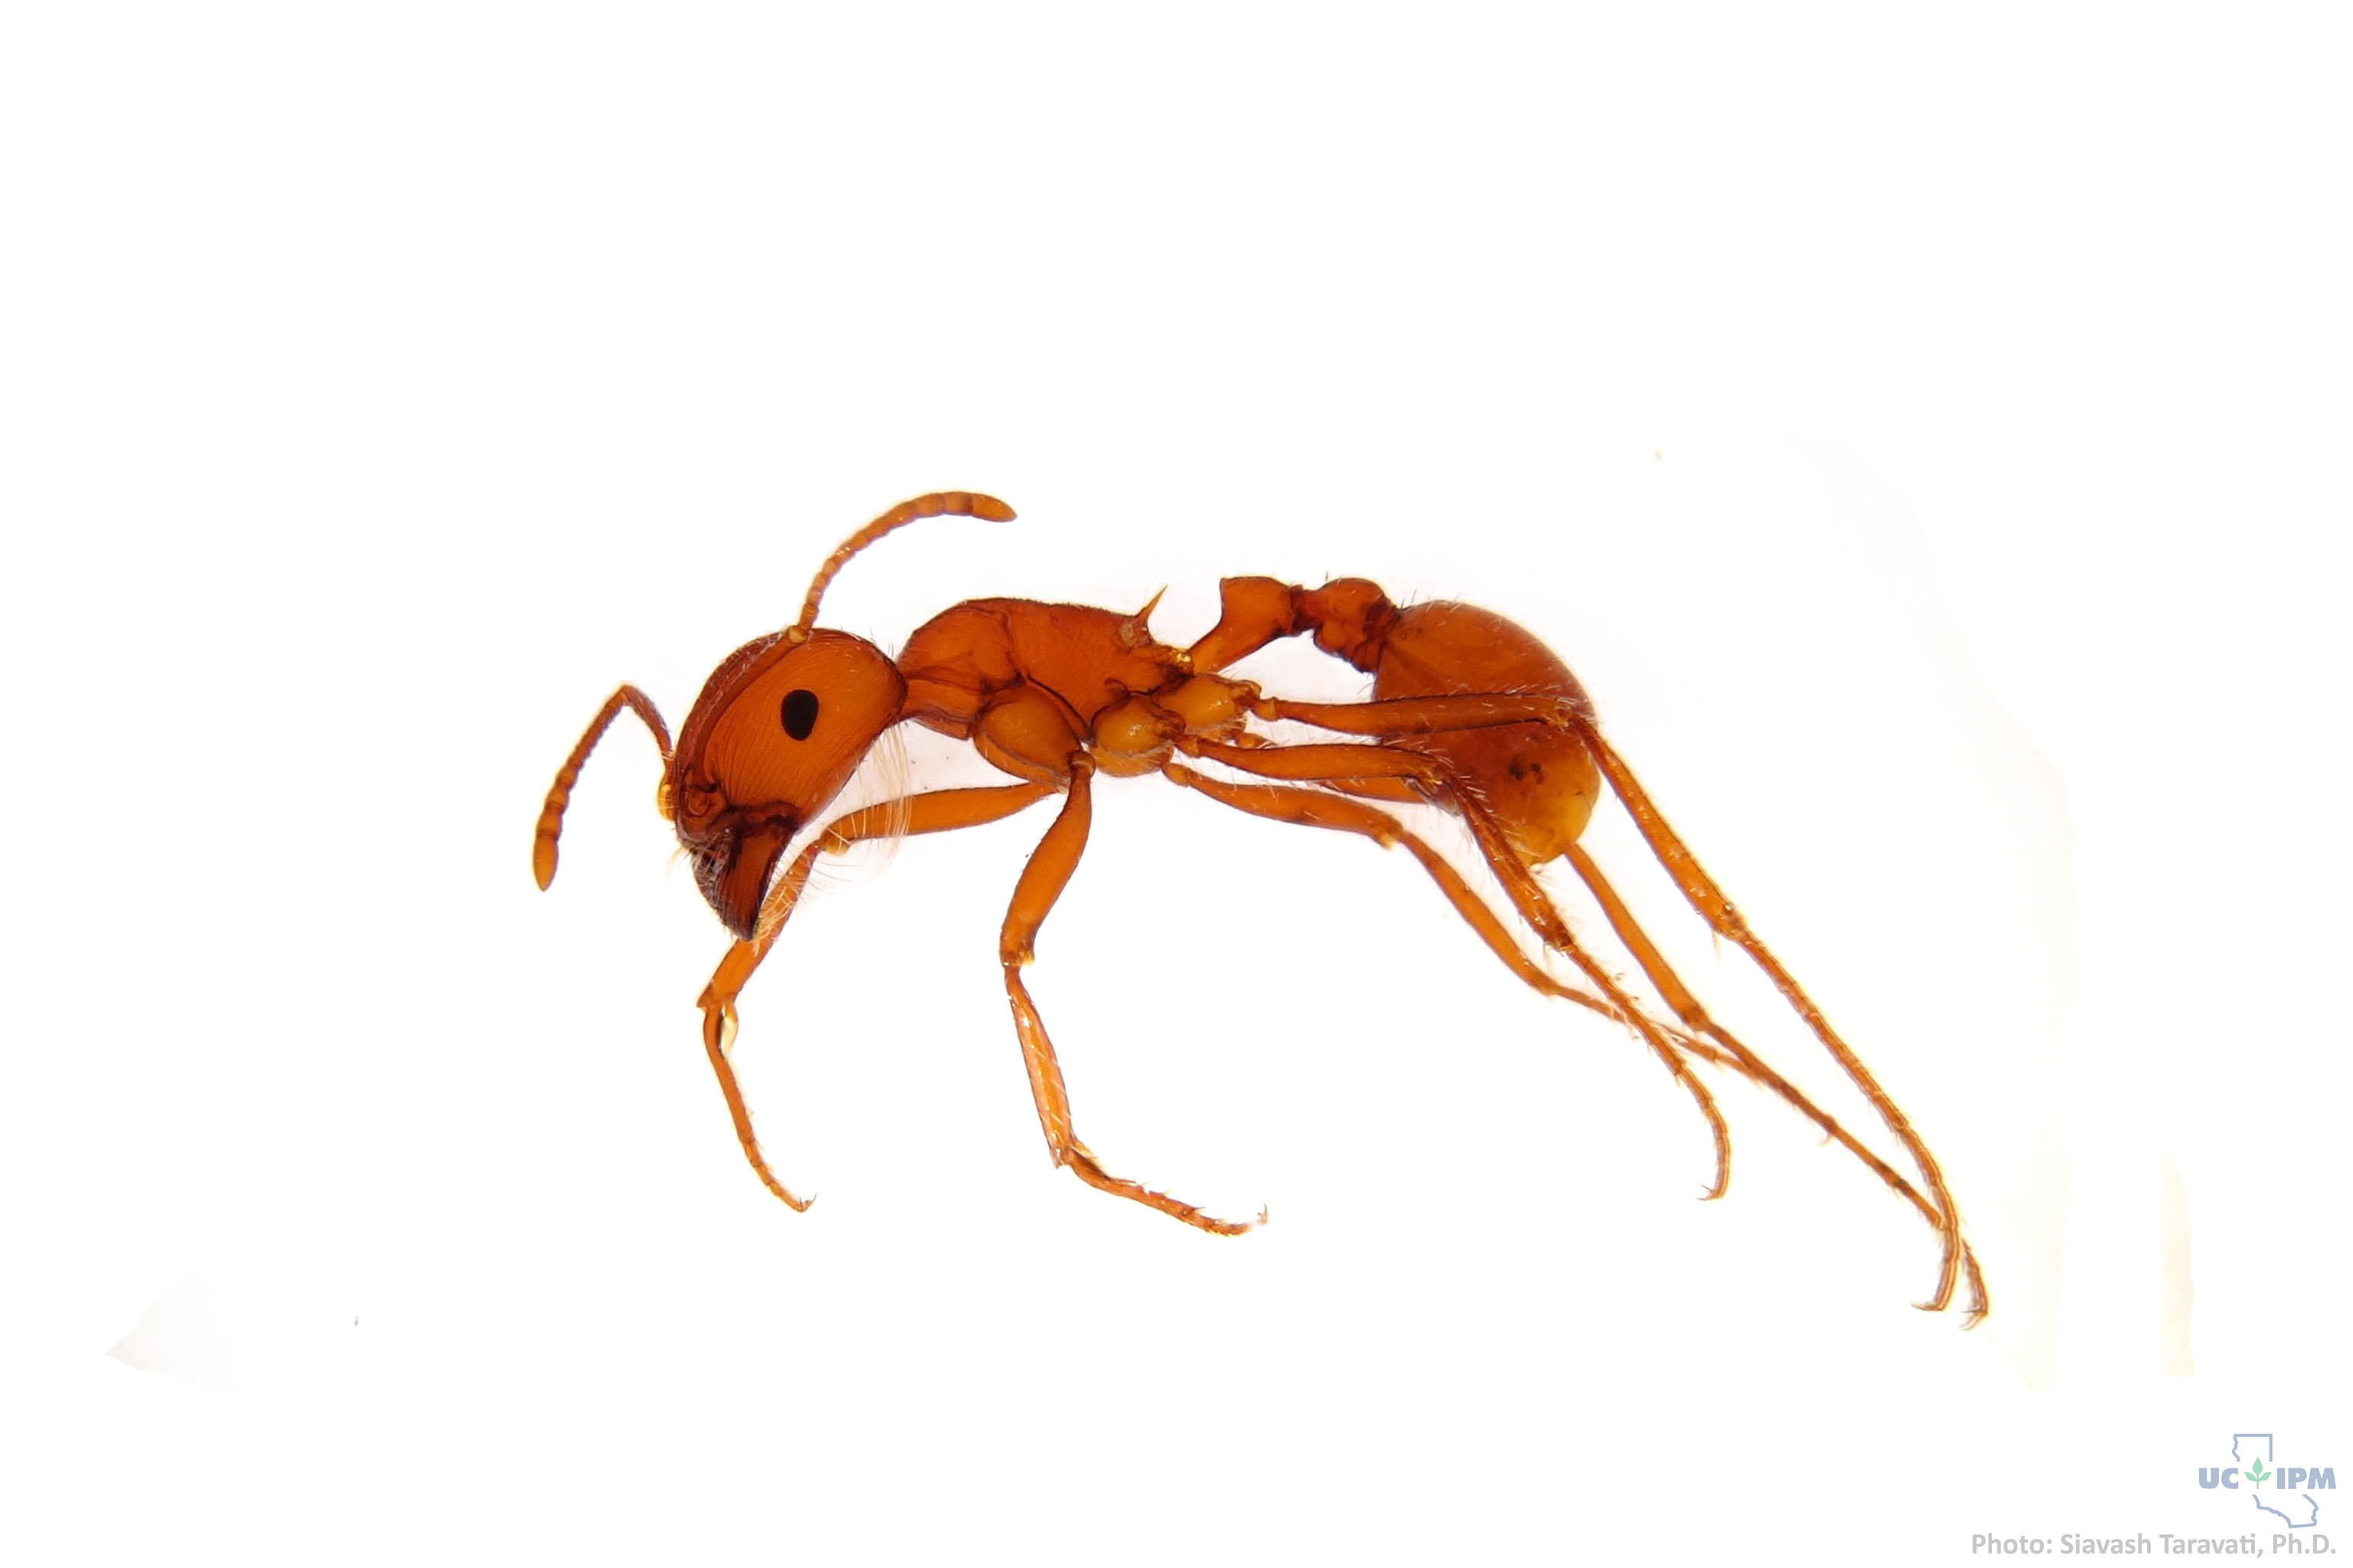 A harvester ant - Pogonomyrmex sp.